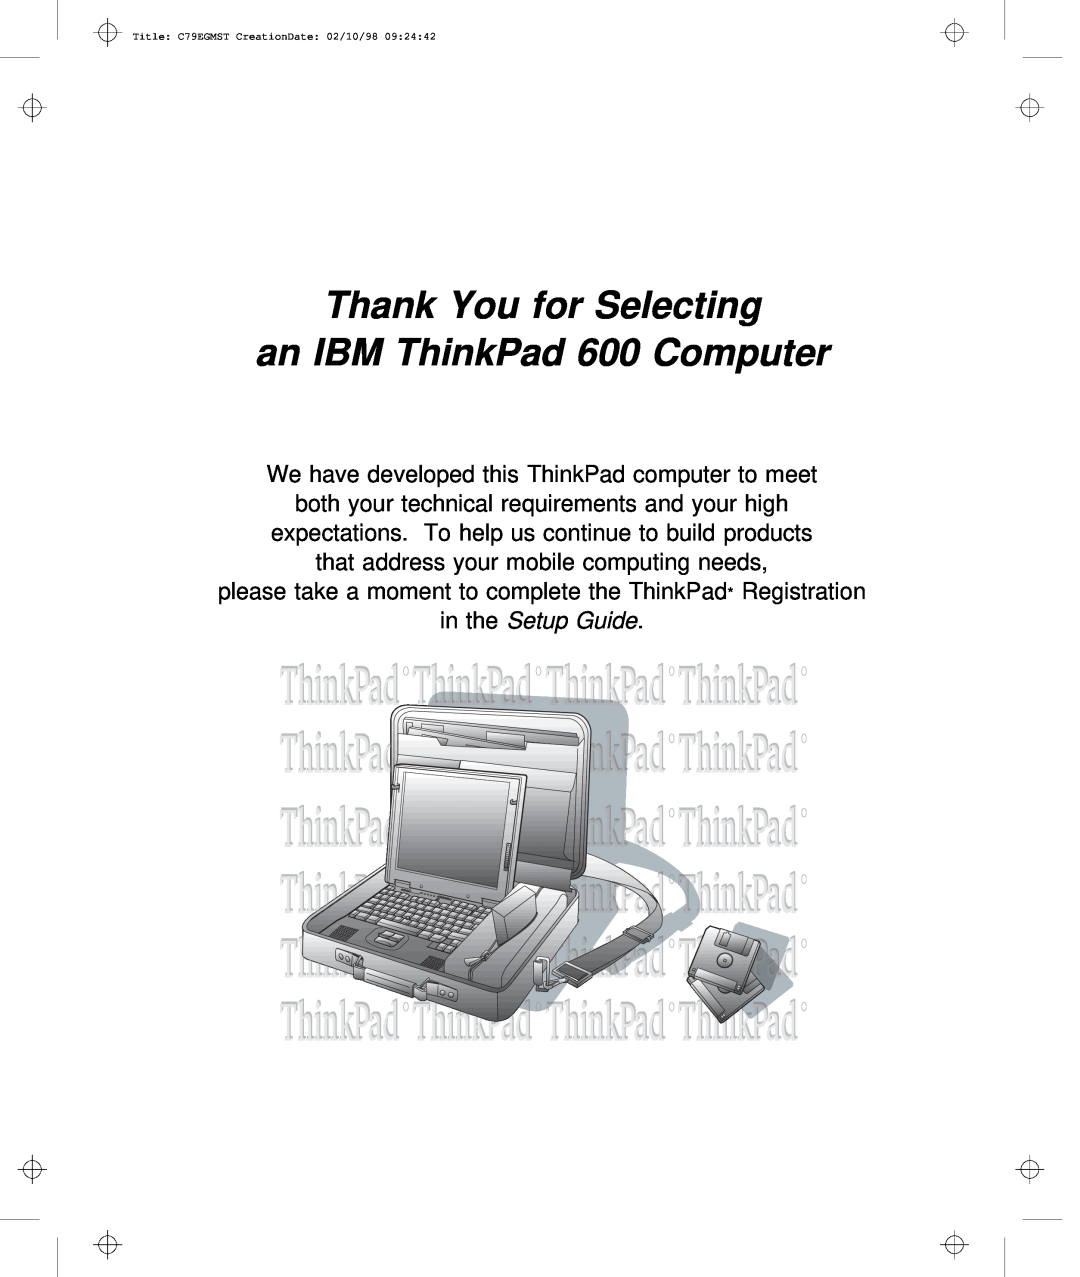 IBM C79EGMST manual Thank You for Selecting an IBM ThinkPad 600 Computer 